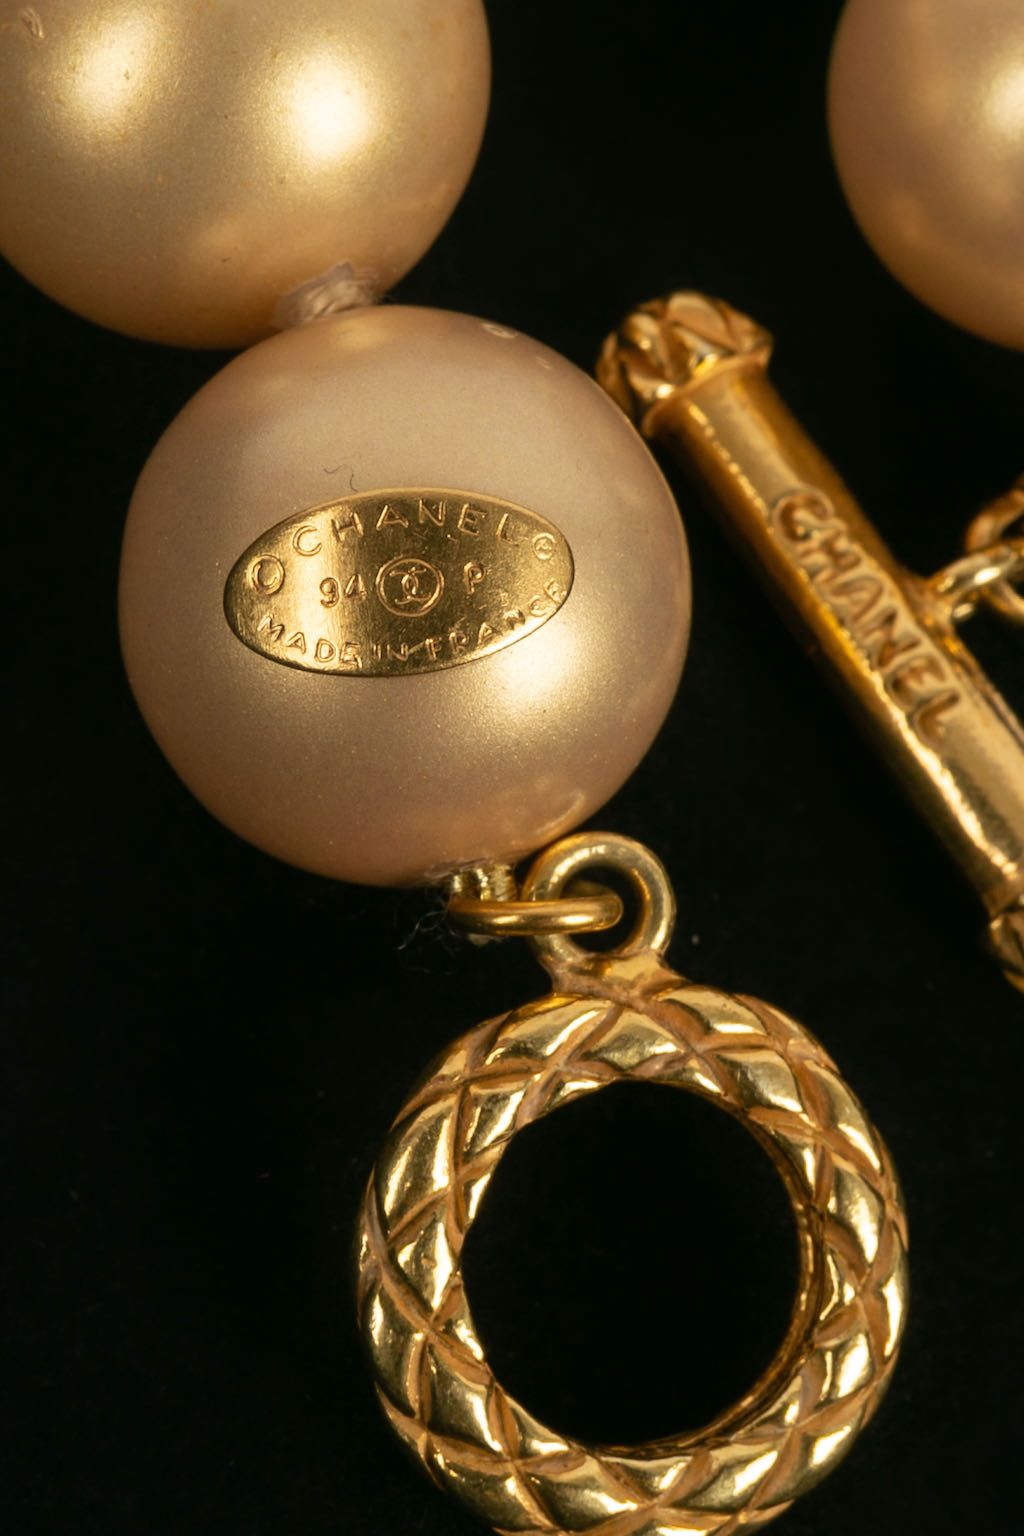 CHANEL, Gold Cc Logo Pearl Necklace - Vintage